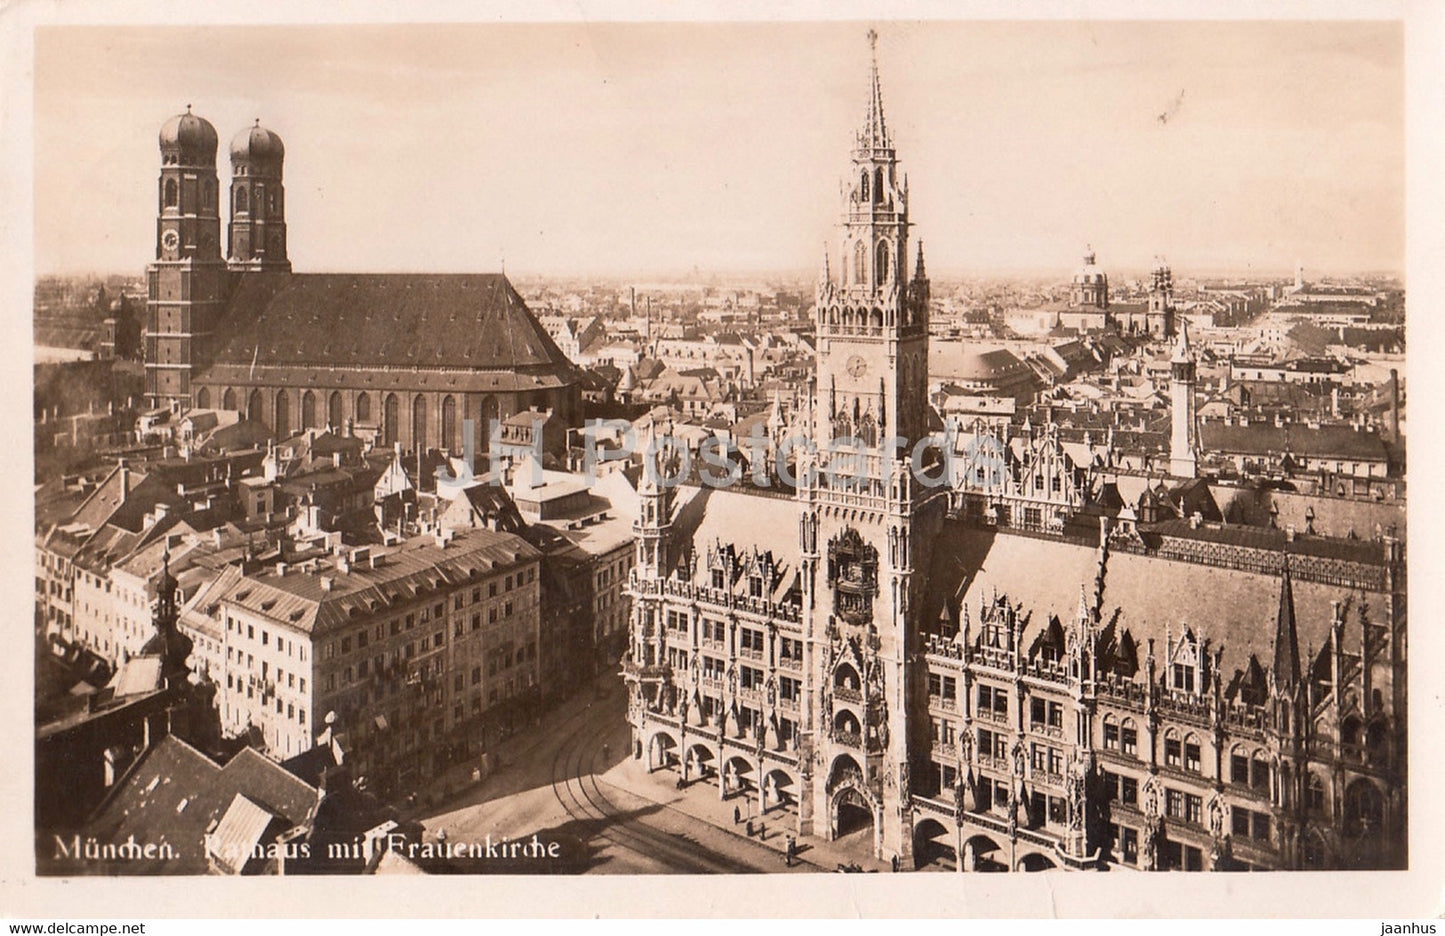 Munchen - Rathaus mit Frauenkirche - Munich - 140 - old postcard - 1939 - Germany - used - JH Postcards